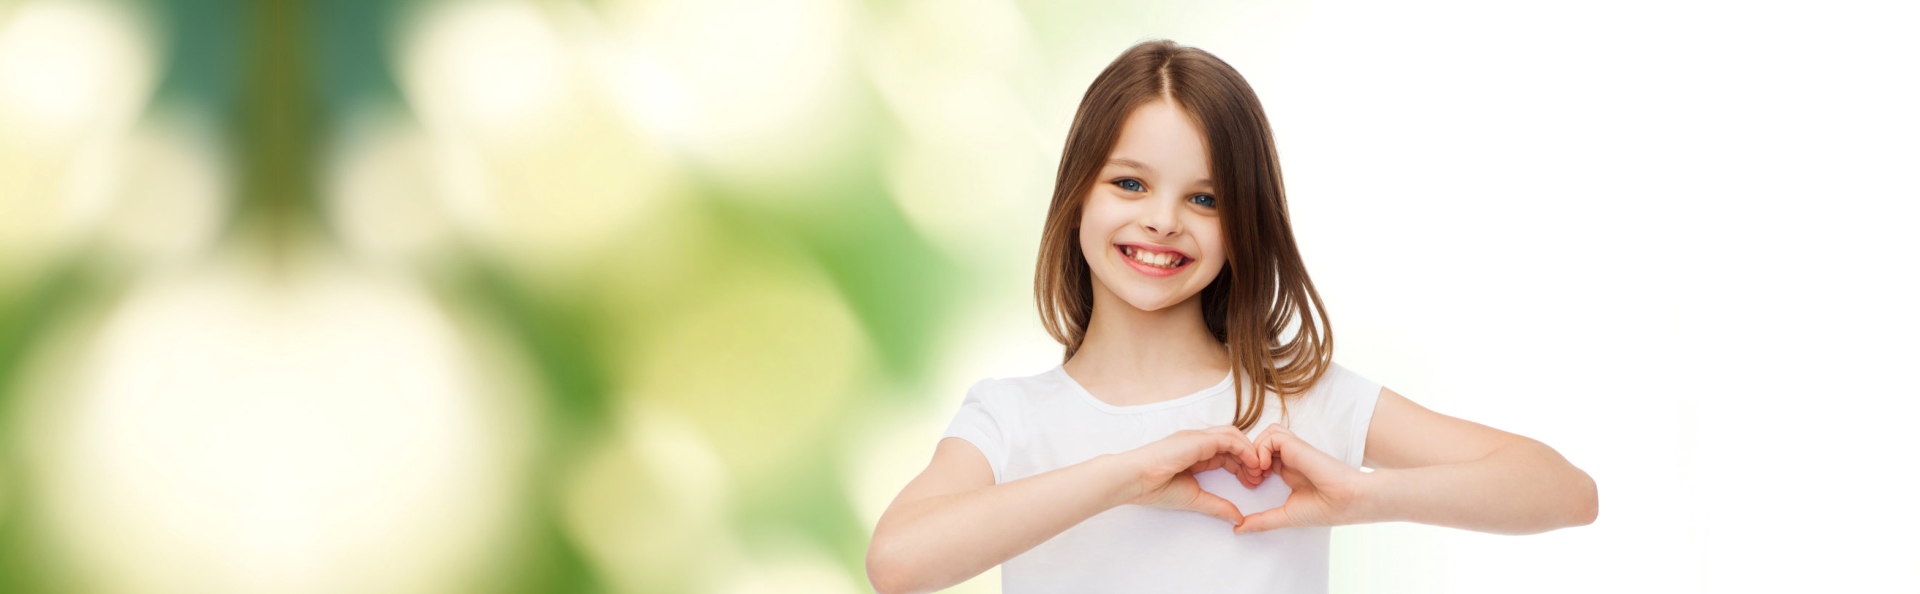 smiling little girl making heart-shape gesture